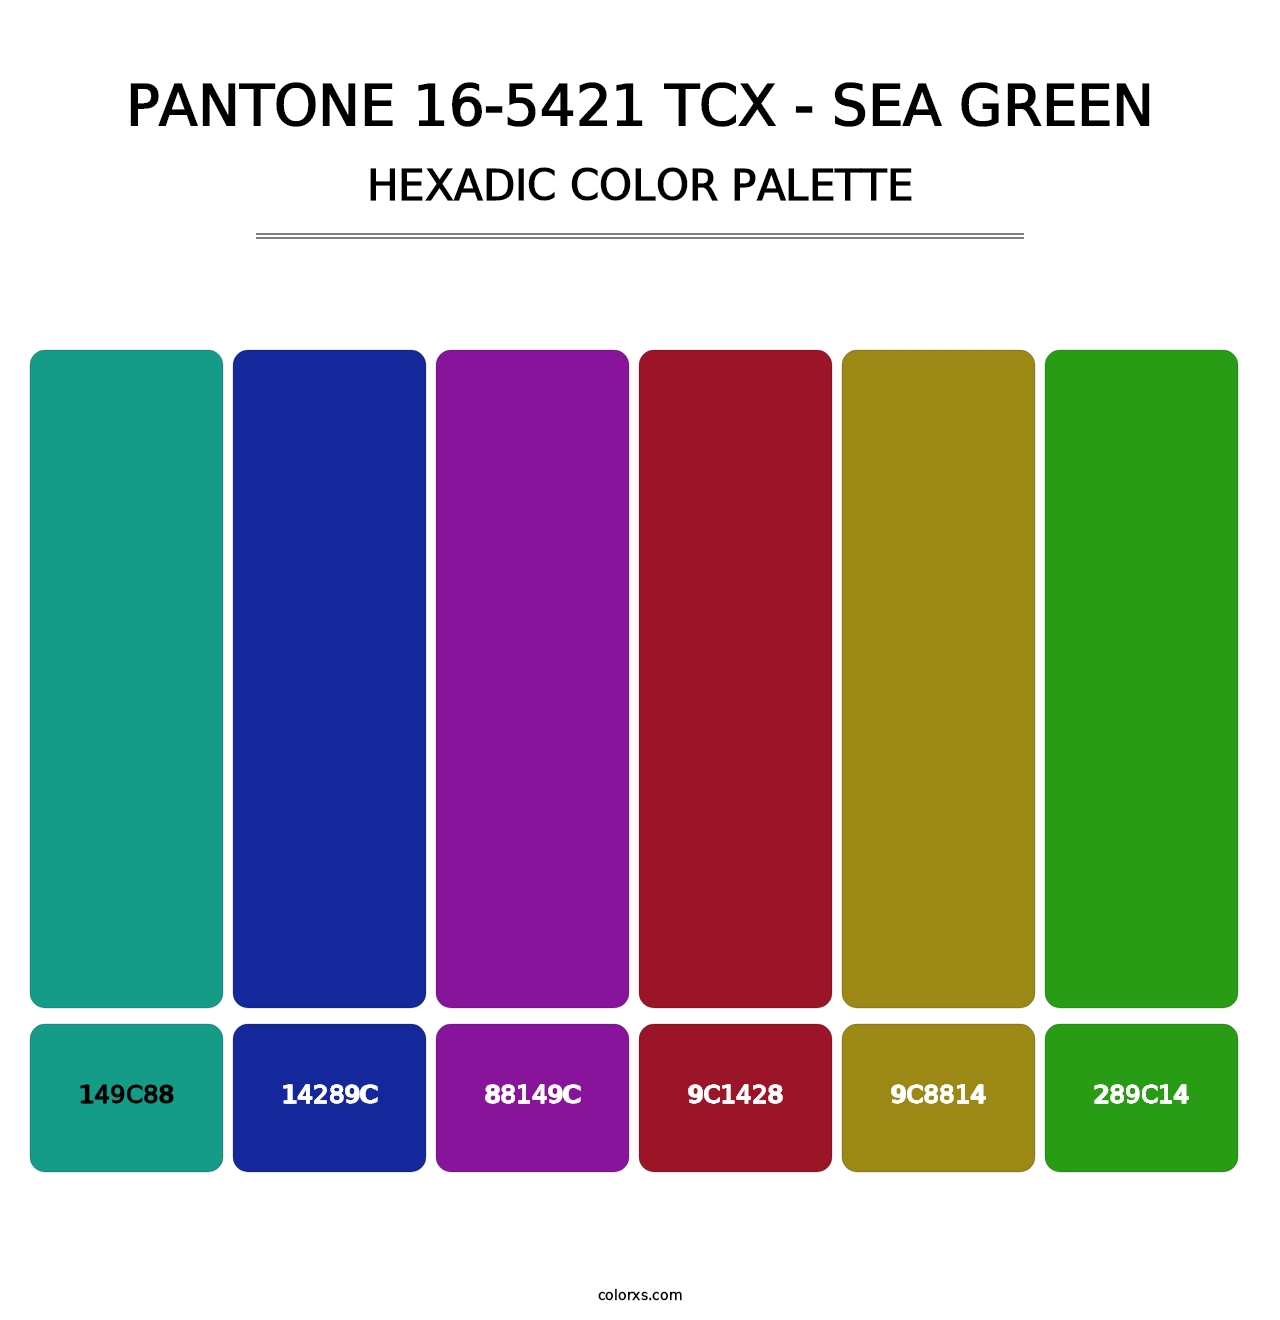 PANTONE 16-5421 TCX - Sea Green - Hexadic Color Palette